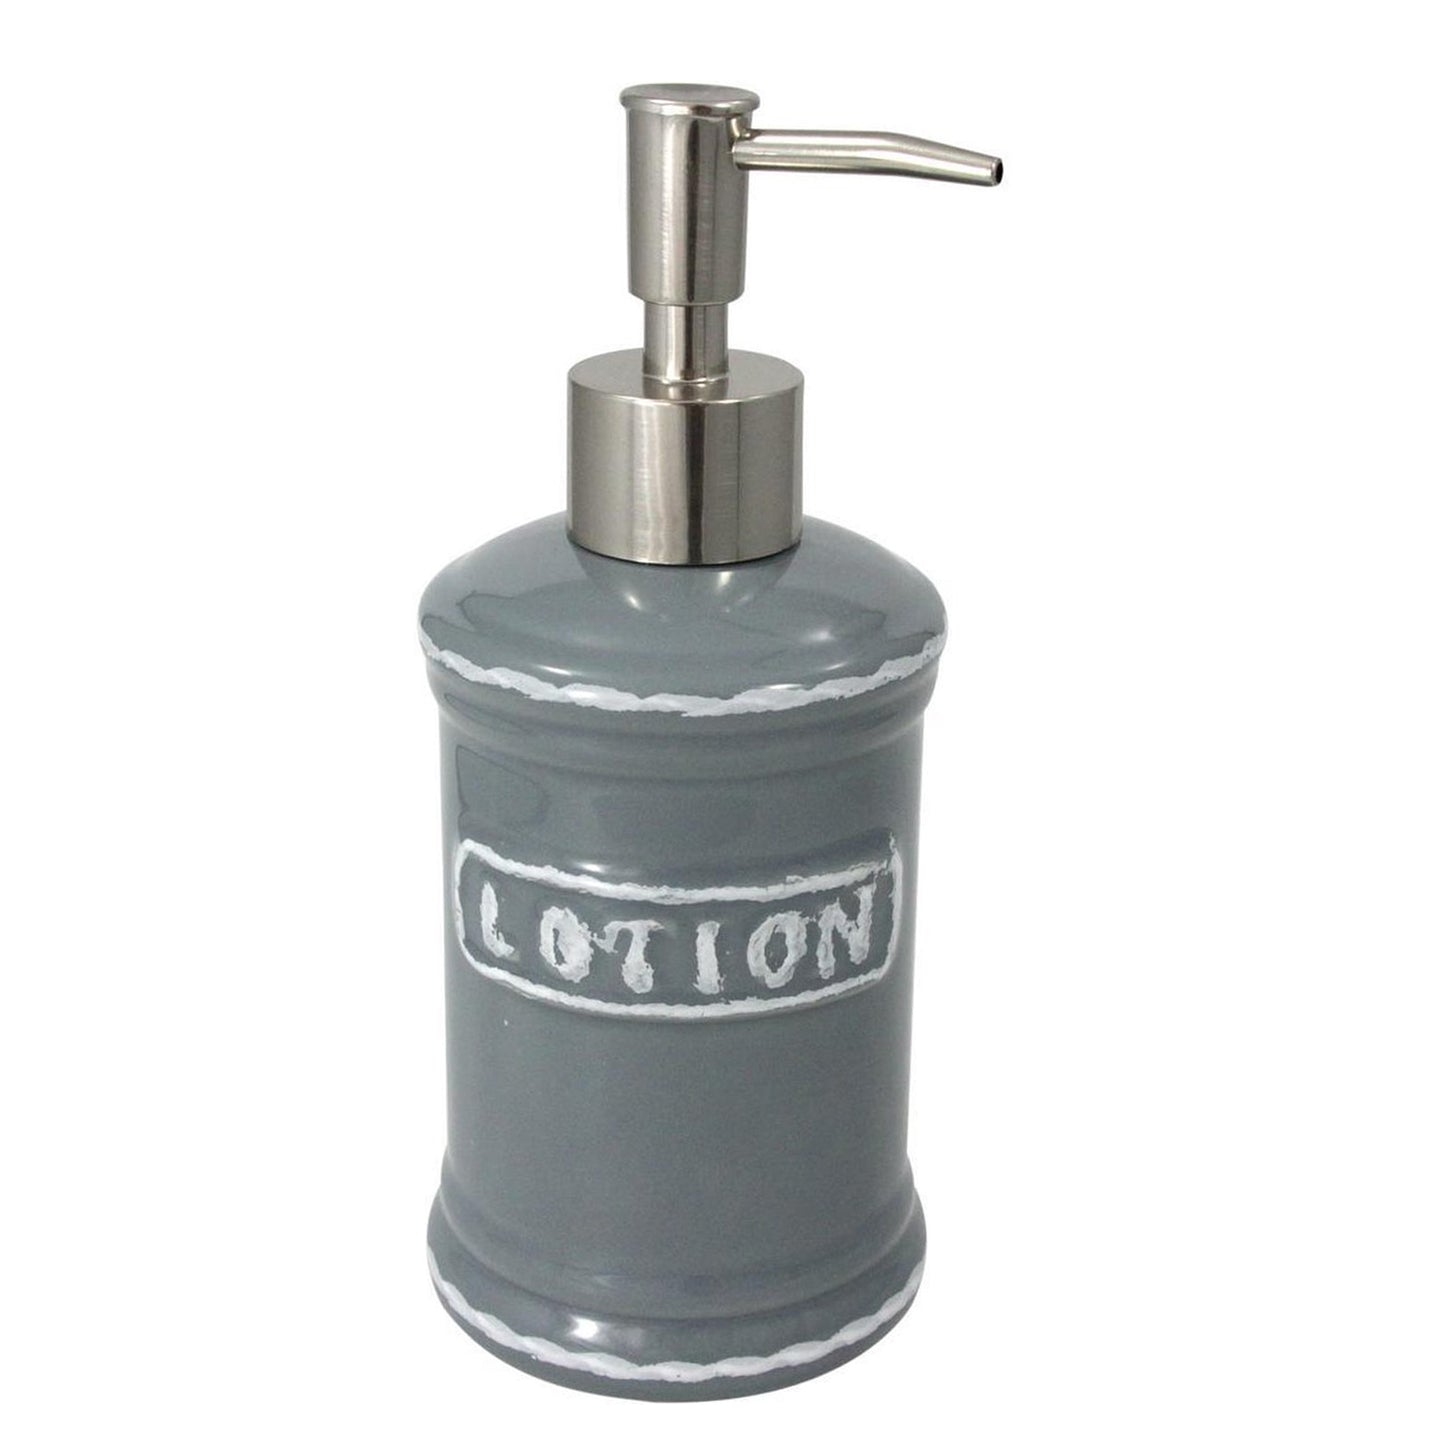 Ceramic Soap Dispenser - Lotion Ø8x18m